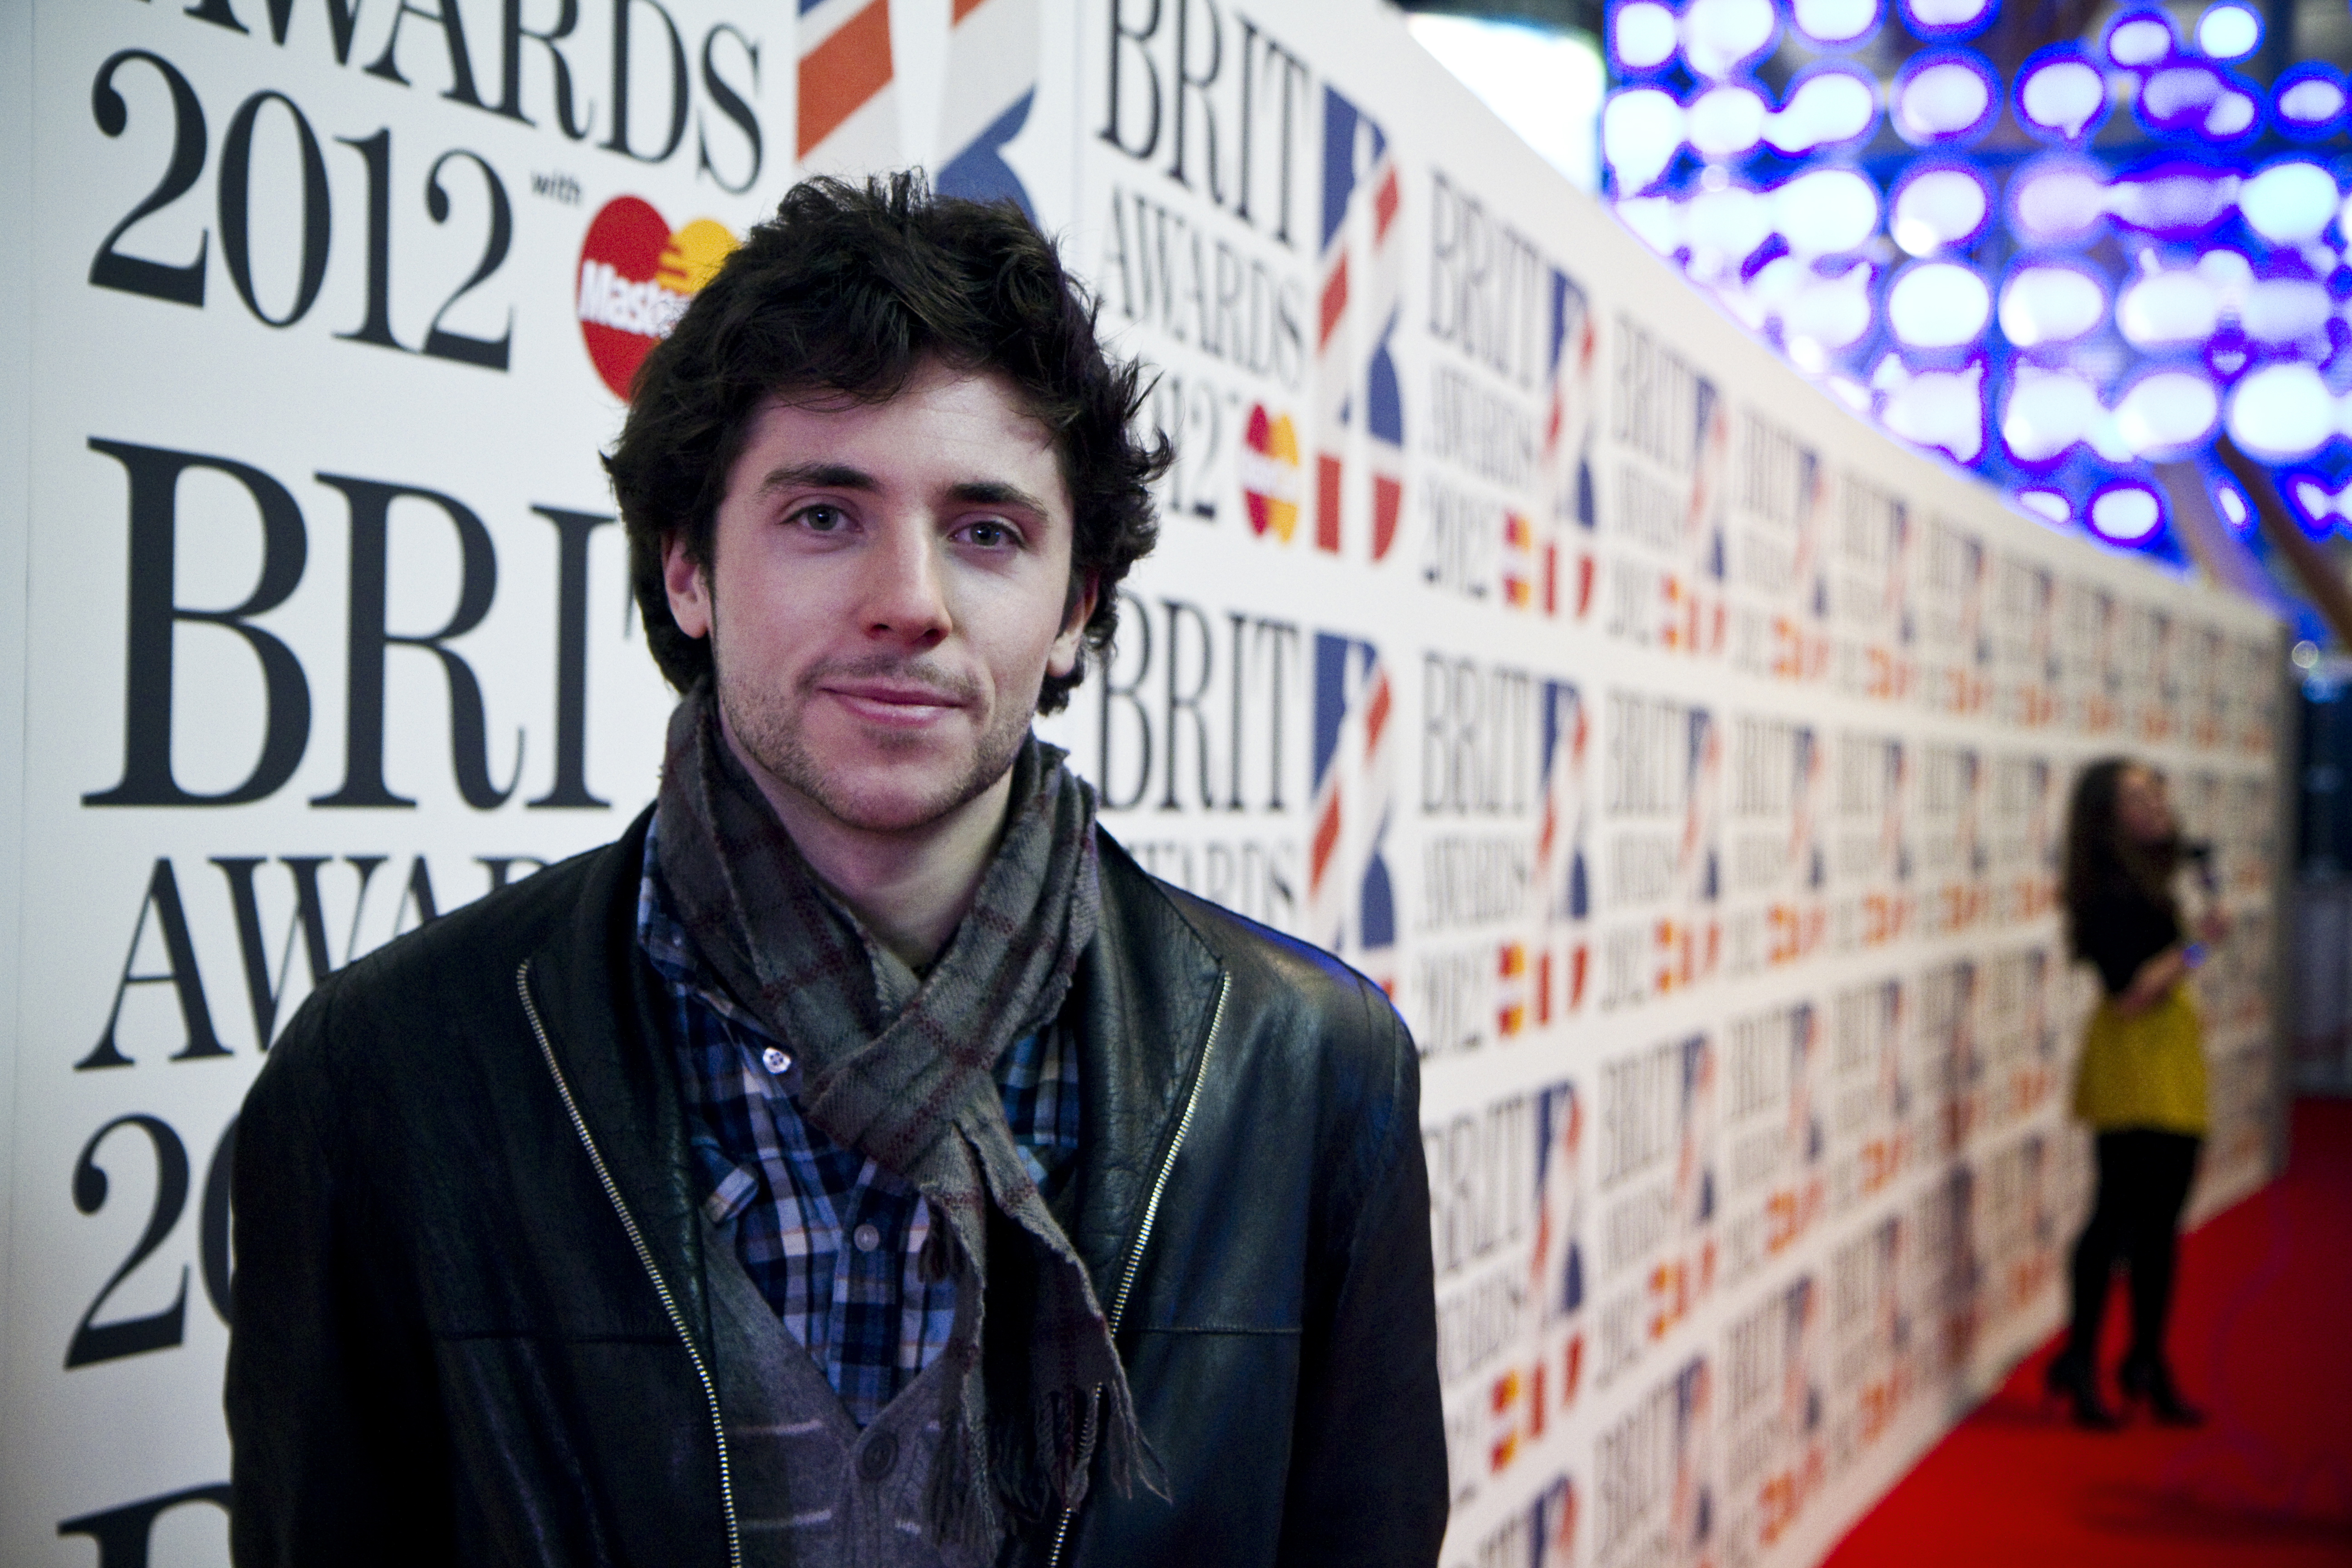 BRIT Awards 2012